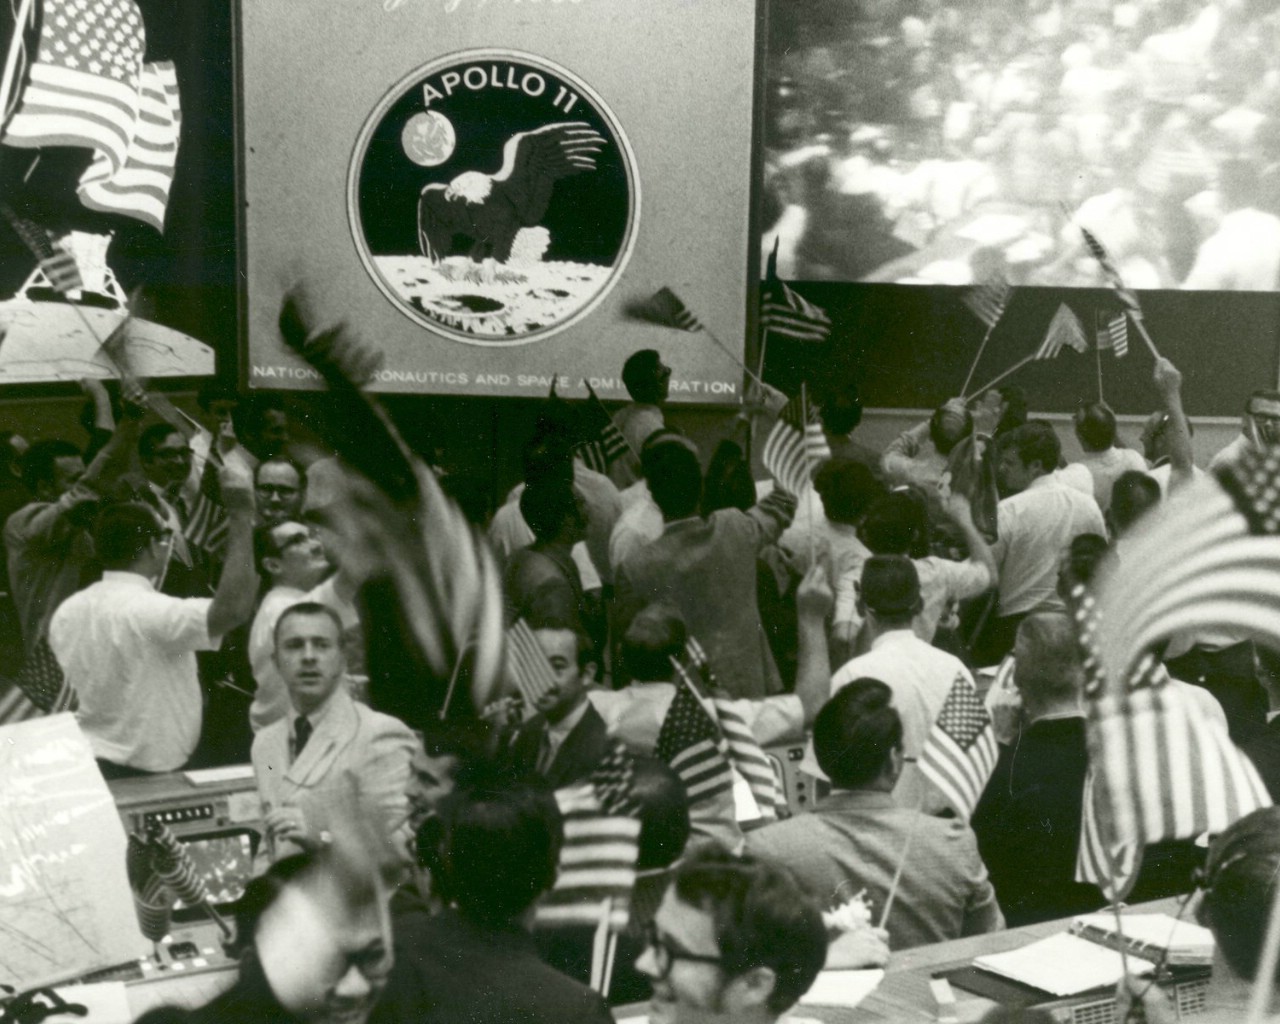 壁纸1280x1024One Giant Leap for Mankind  Mission Control Celebrates After Conclusion of the Apollo 11 Lunar 登月任务结束后的欢庆壁纸 阿波罗11号登月40周年纪念壁纸壁纸 阿波罗11号登月40周年纪念壁纸图片 阿波罗11号登月40周年纪念壁纸素材 人文壁纸 人文图库 人文图片素材桌面壁纸